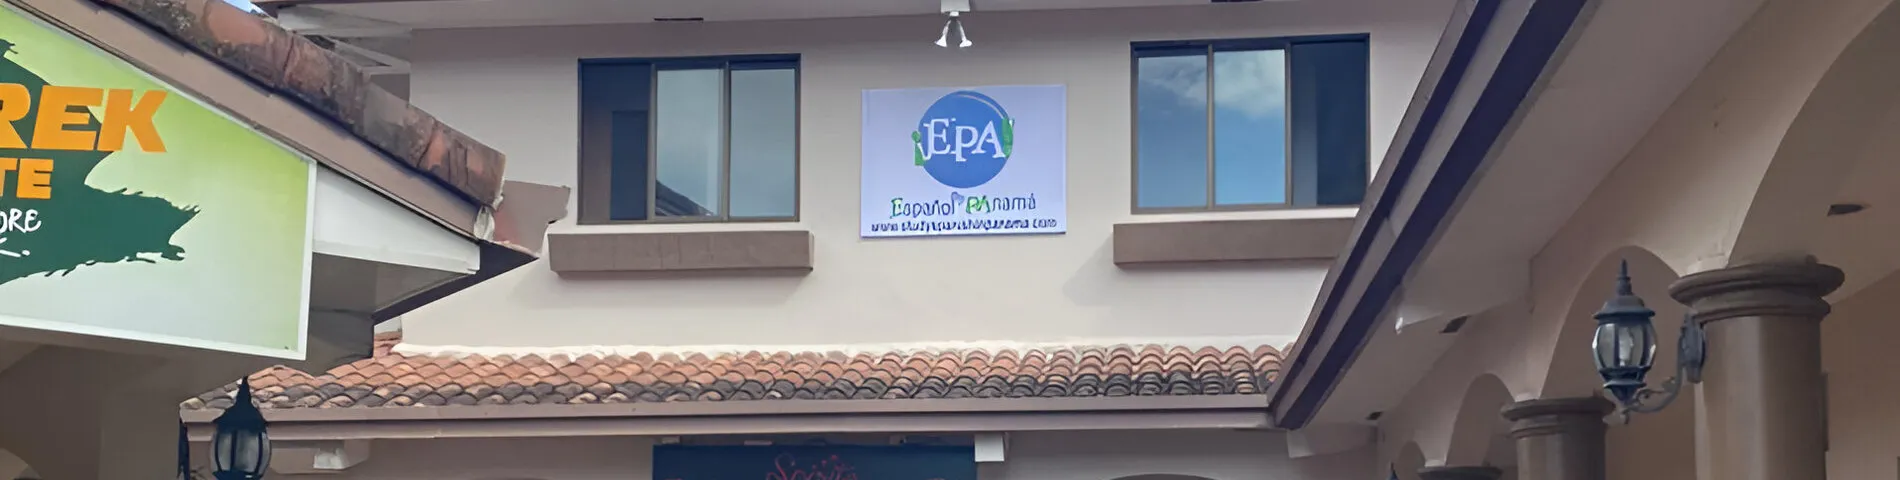 EPA! Español en Panamá immagine 1